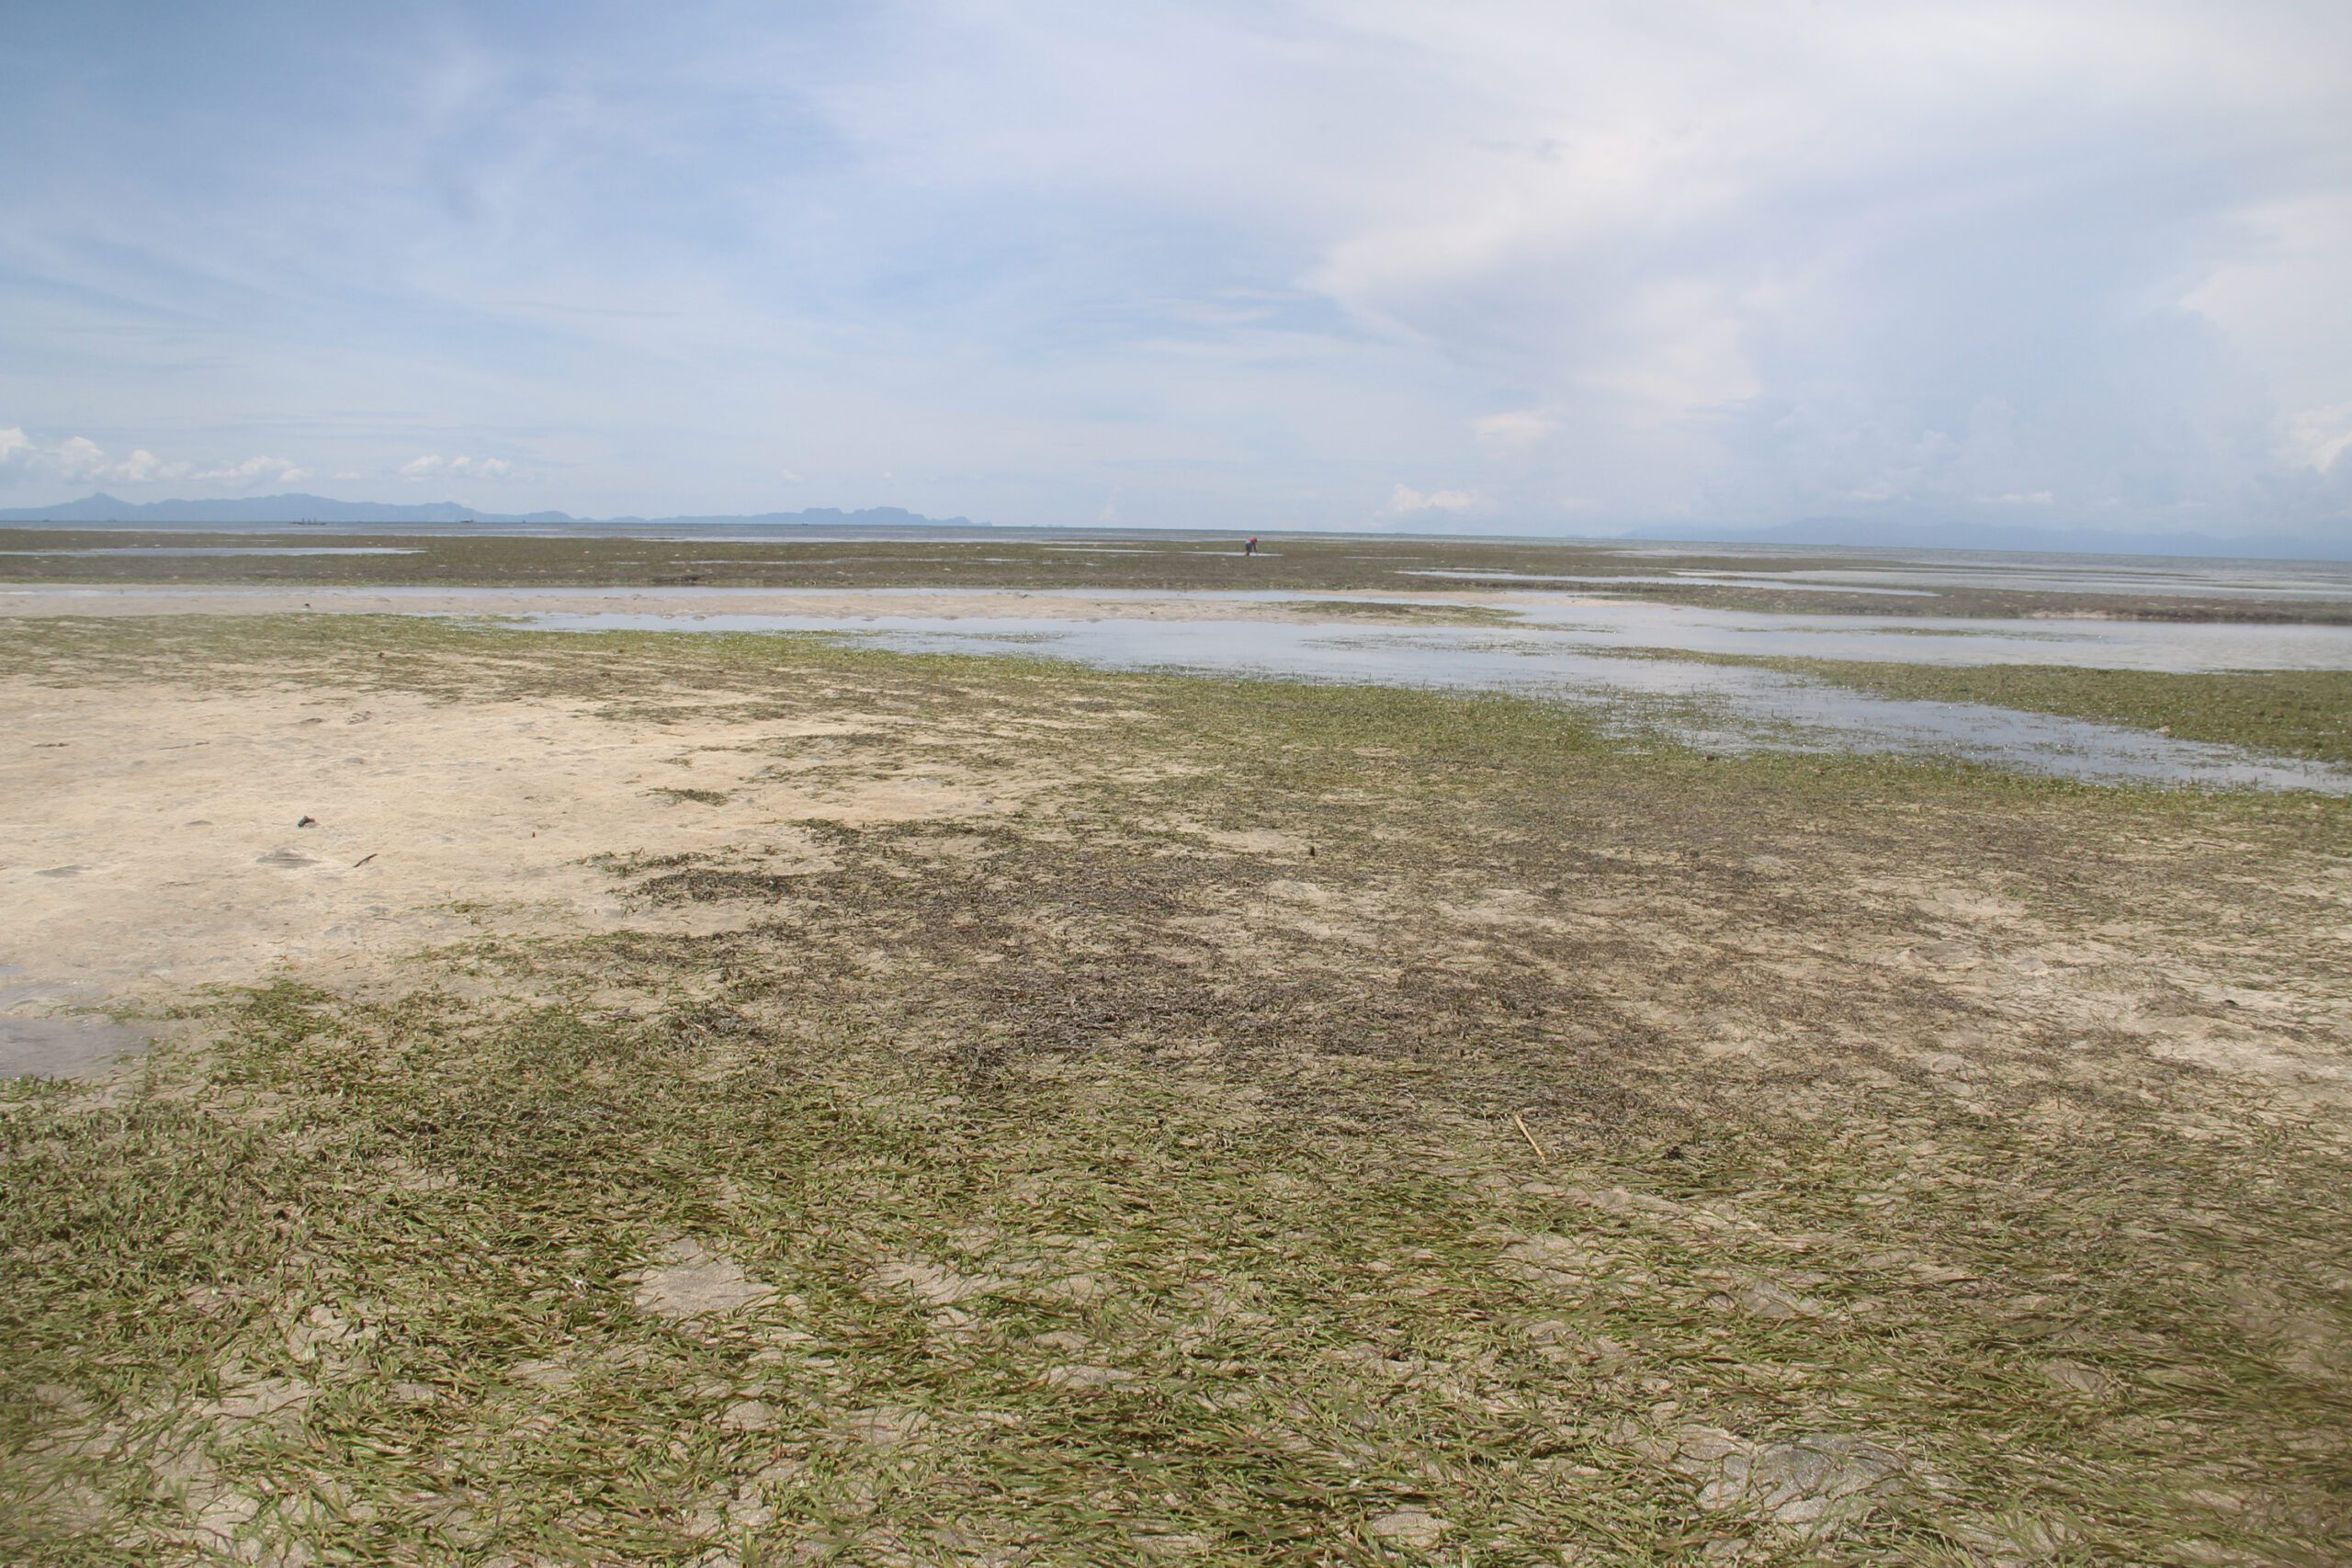 Rising sea temperature impacts seagrass beds in Lagonoy Gulf